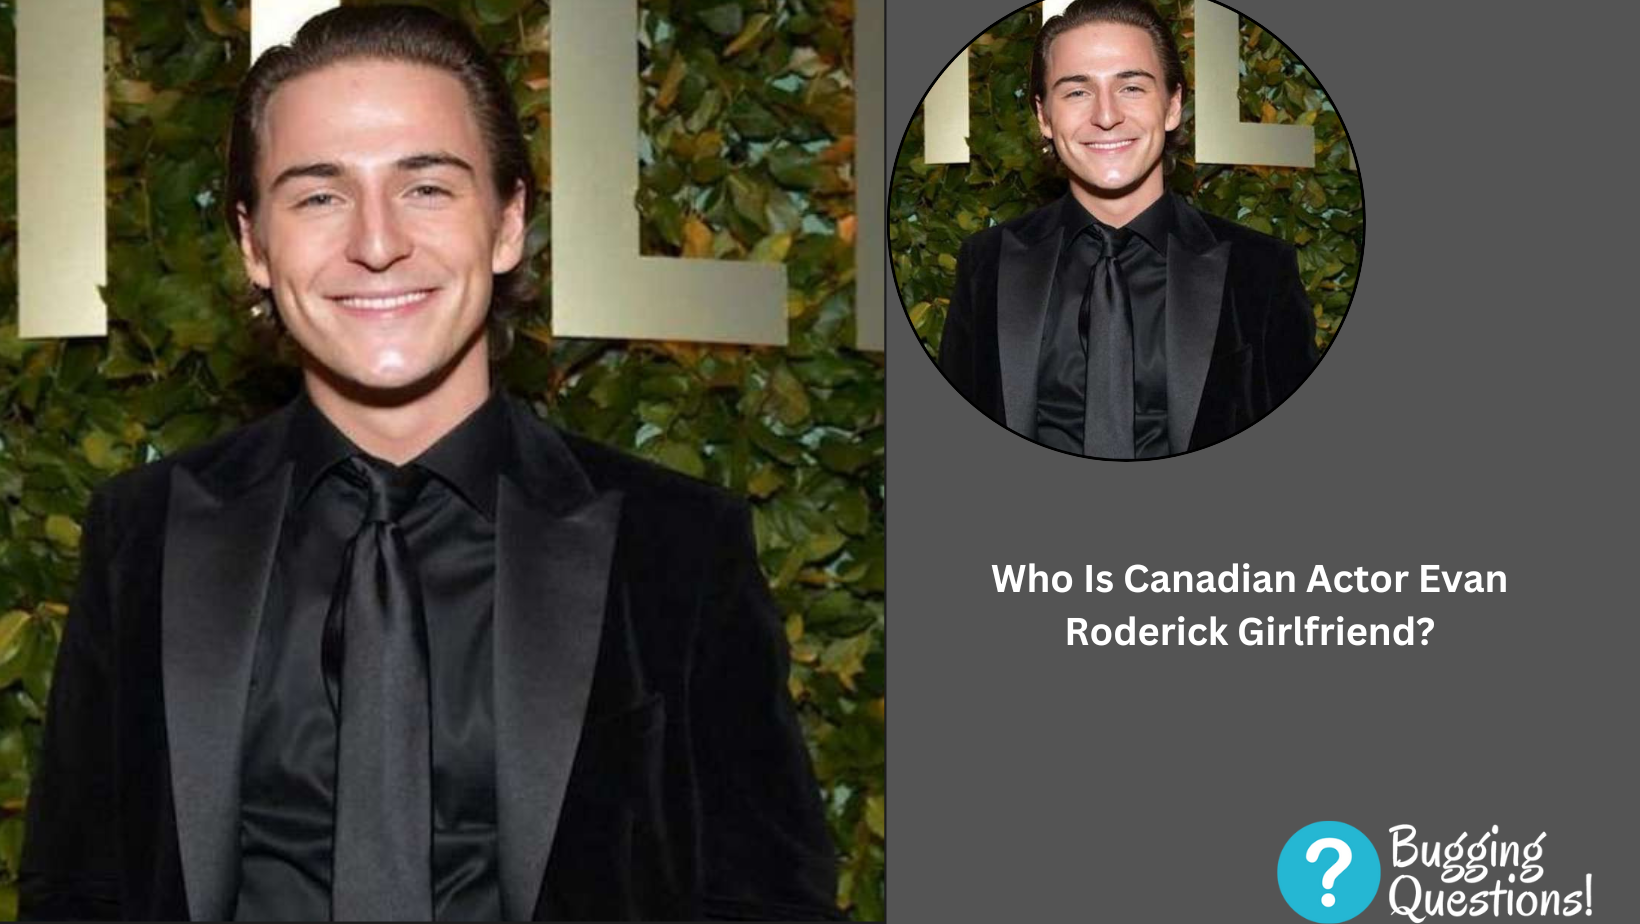 Who Is Canadian Actor Evan Roderick Girlfriend?